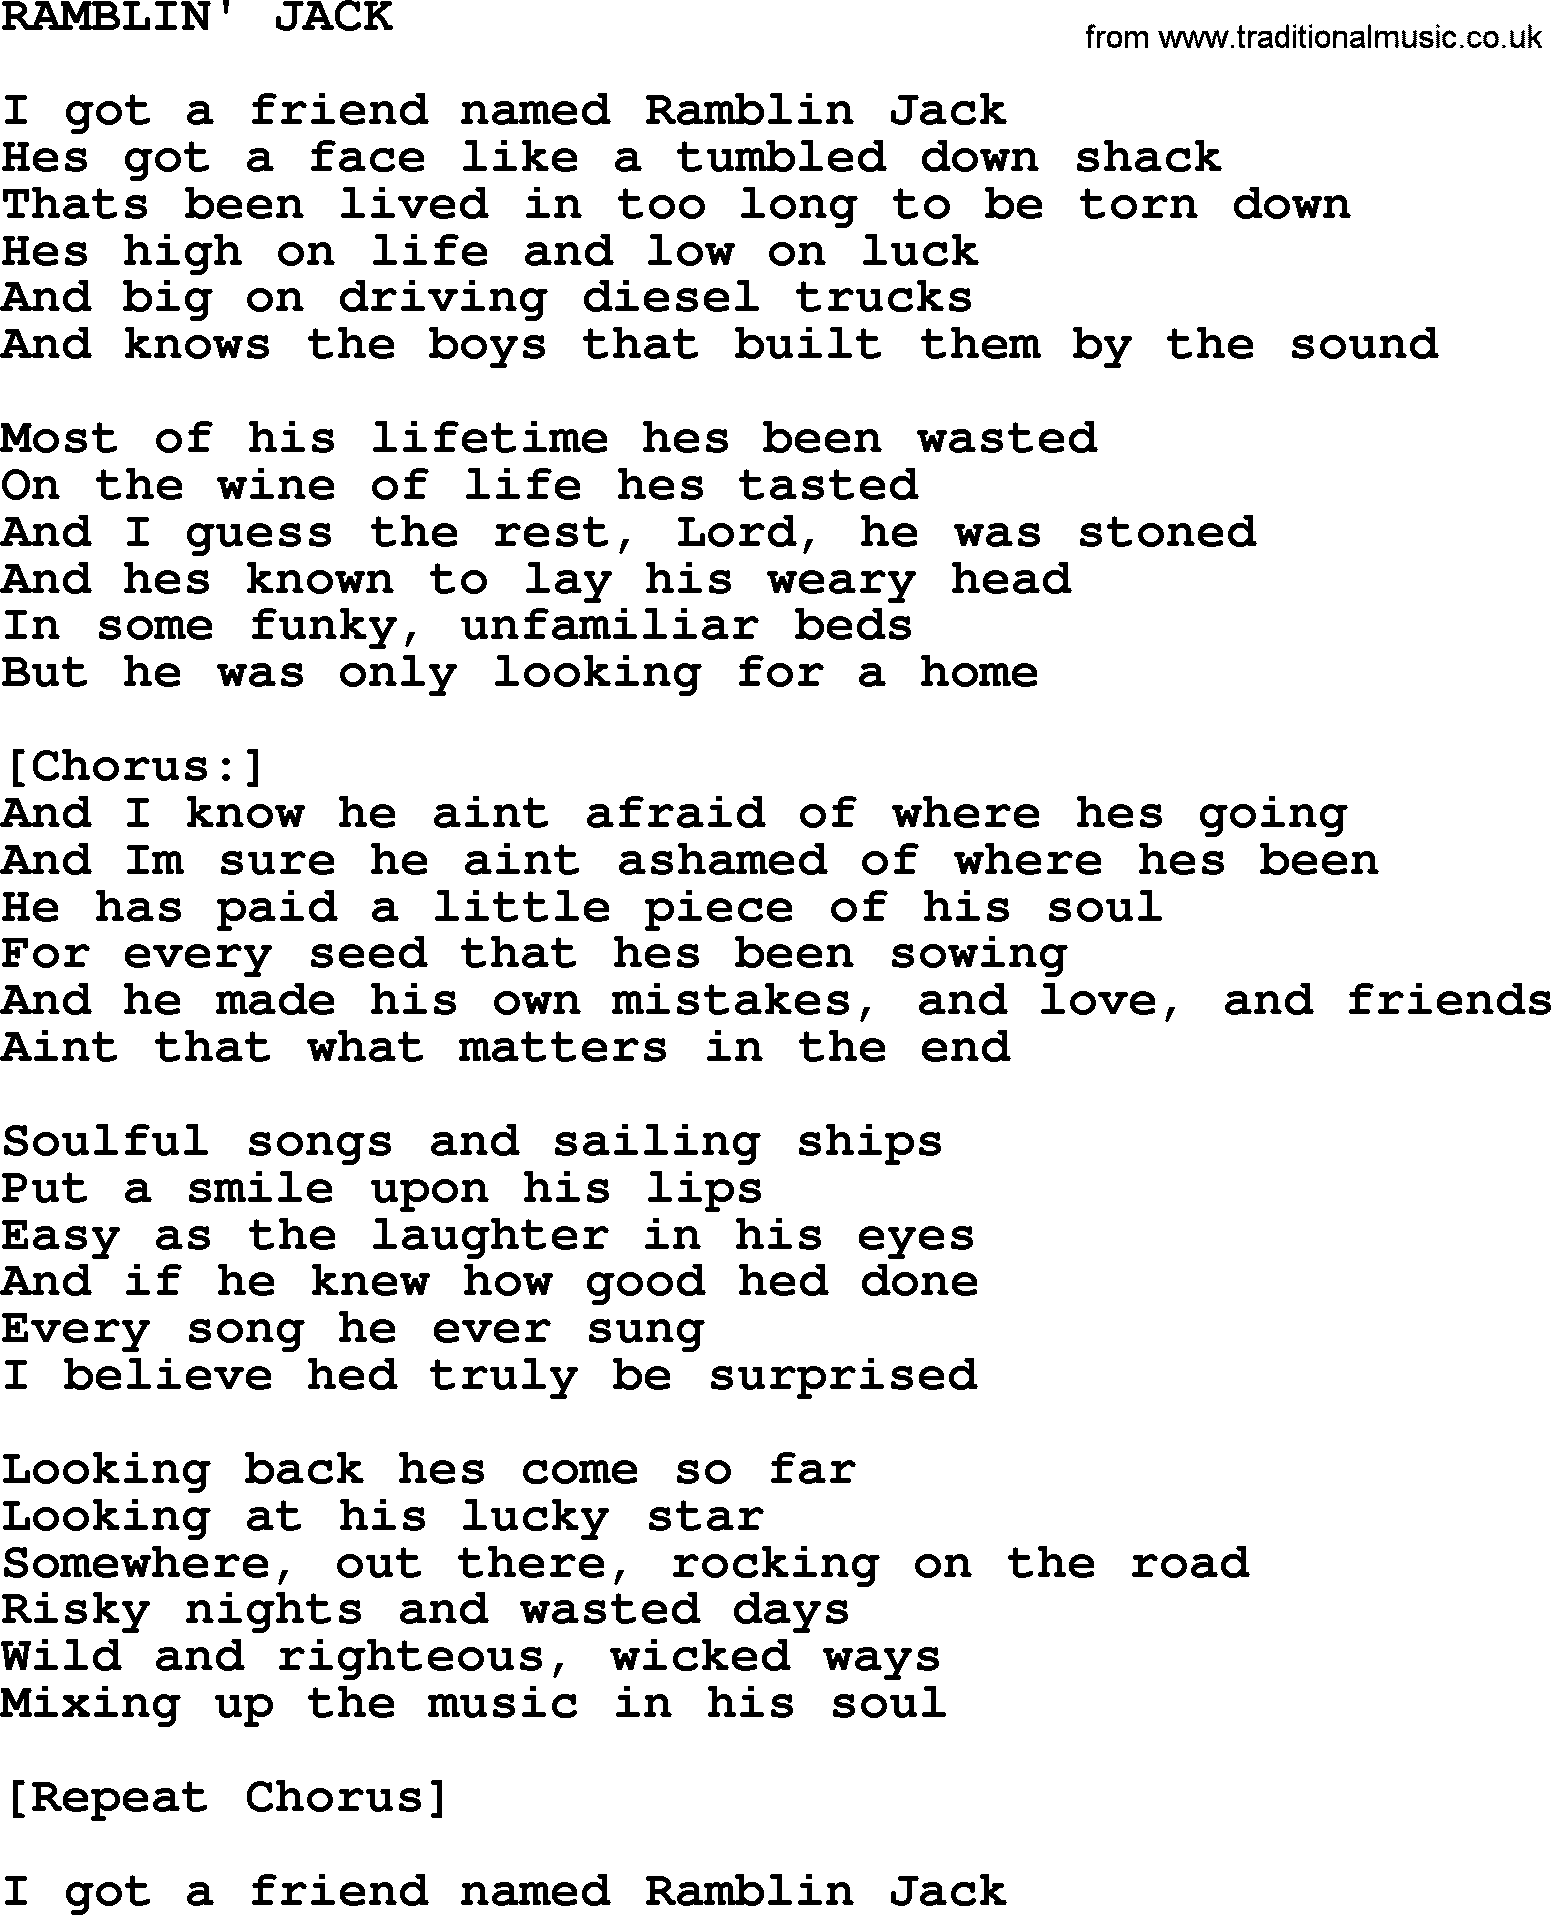 Kris Kristofferson song: Ramblin' Jack lyrics